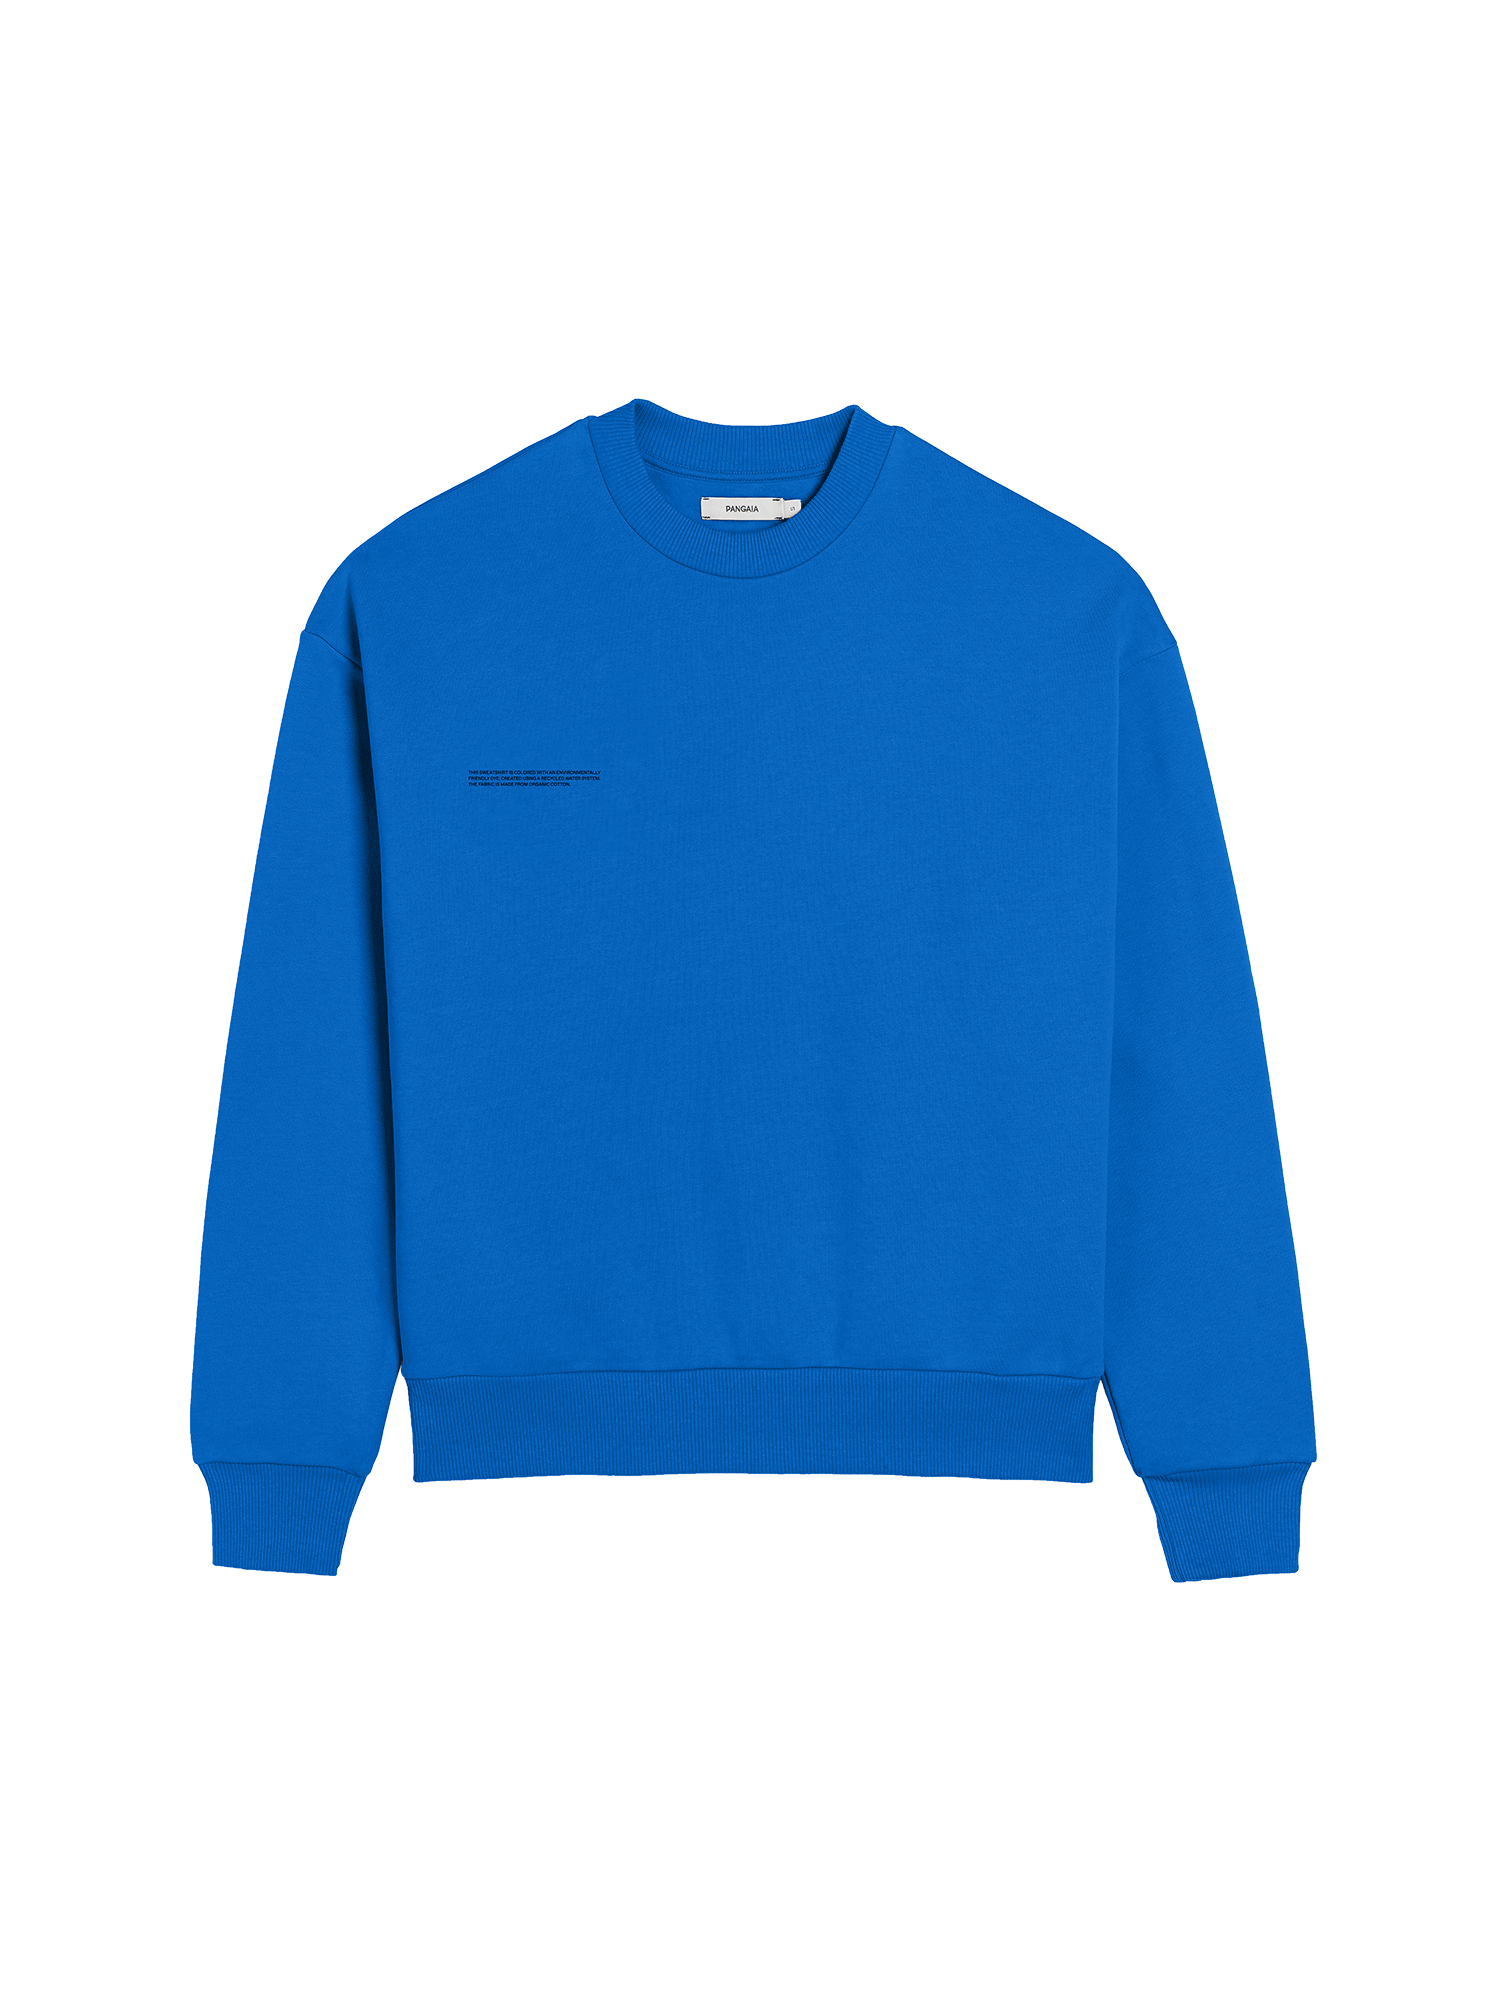 365 Midweight Sweatshirt—cobalt blue